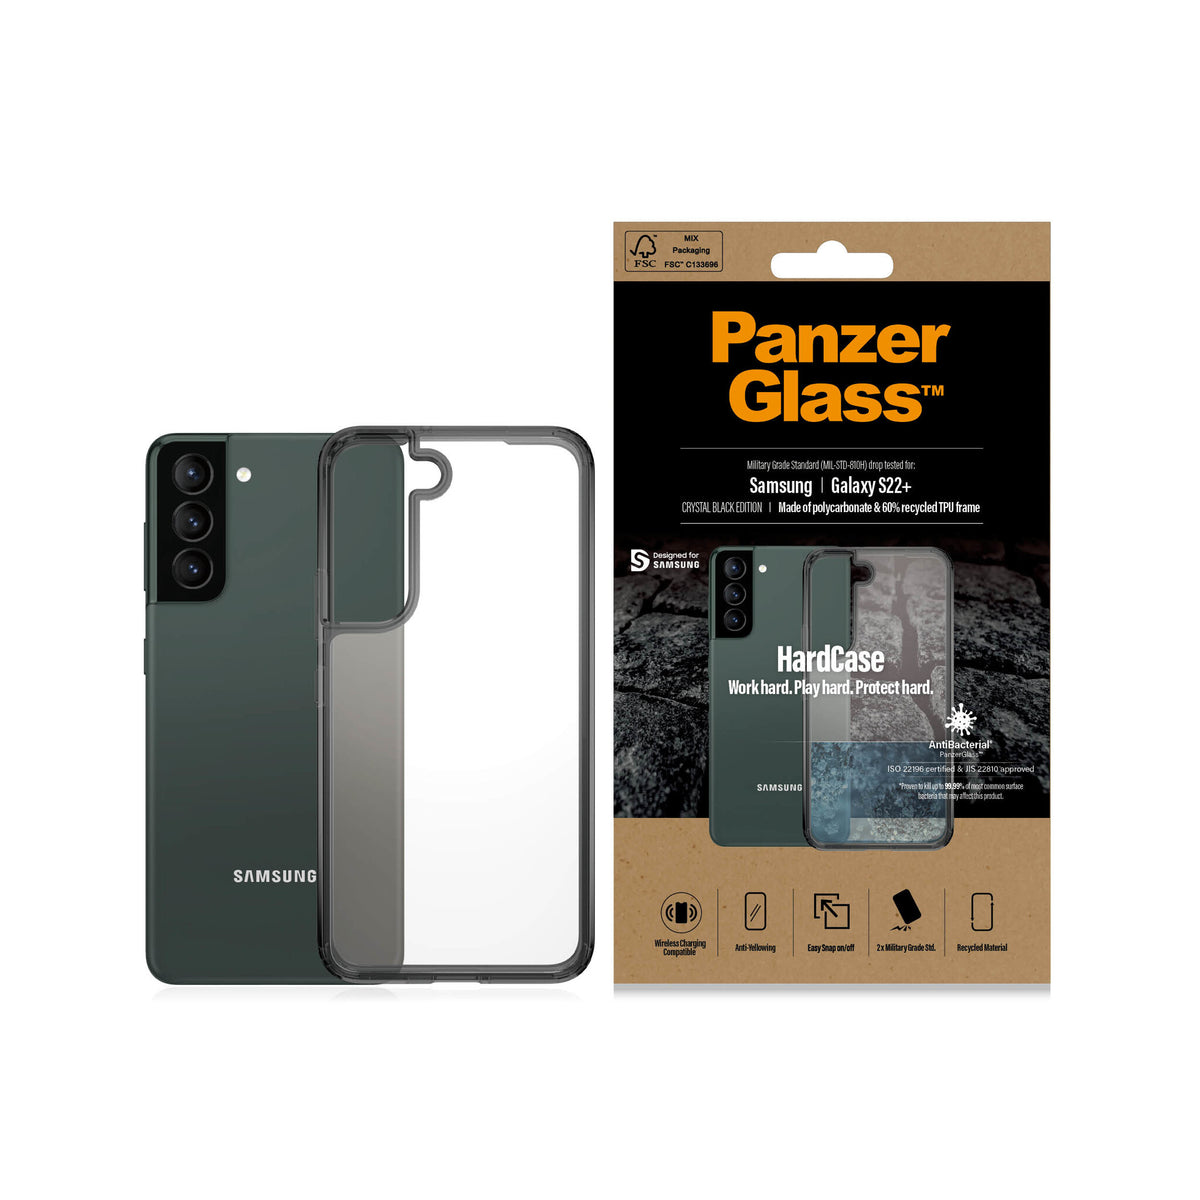 PanzerGlass ® HardCase for Galaxy S22 Plus in Smokey Black